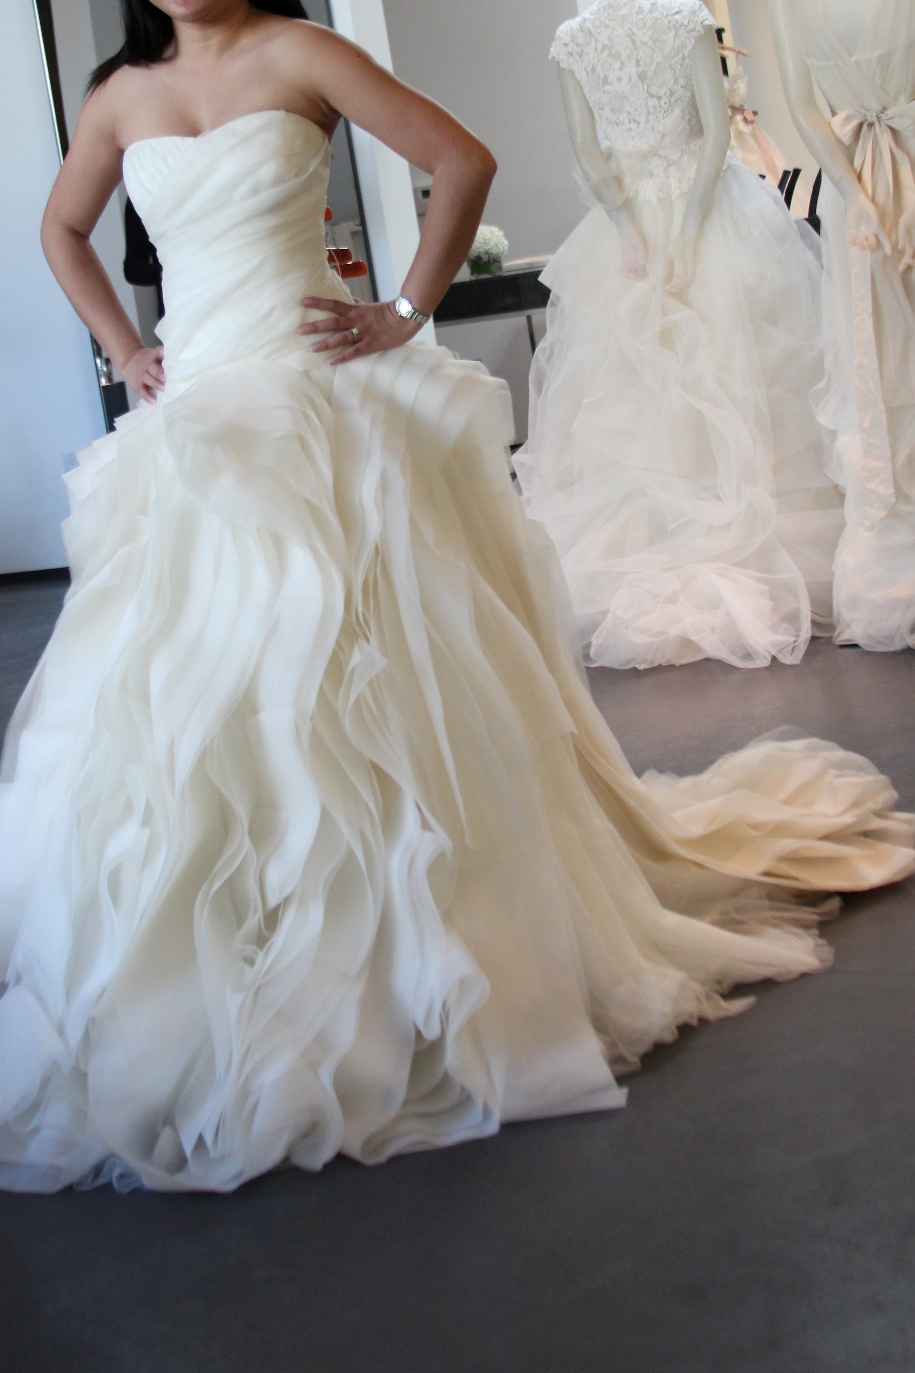 A Diana wedding dress